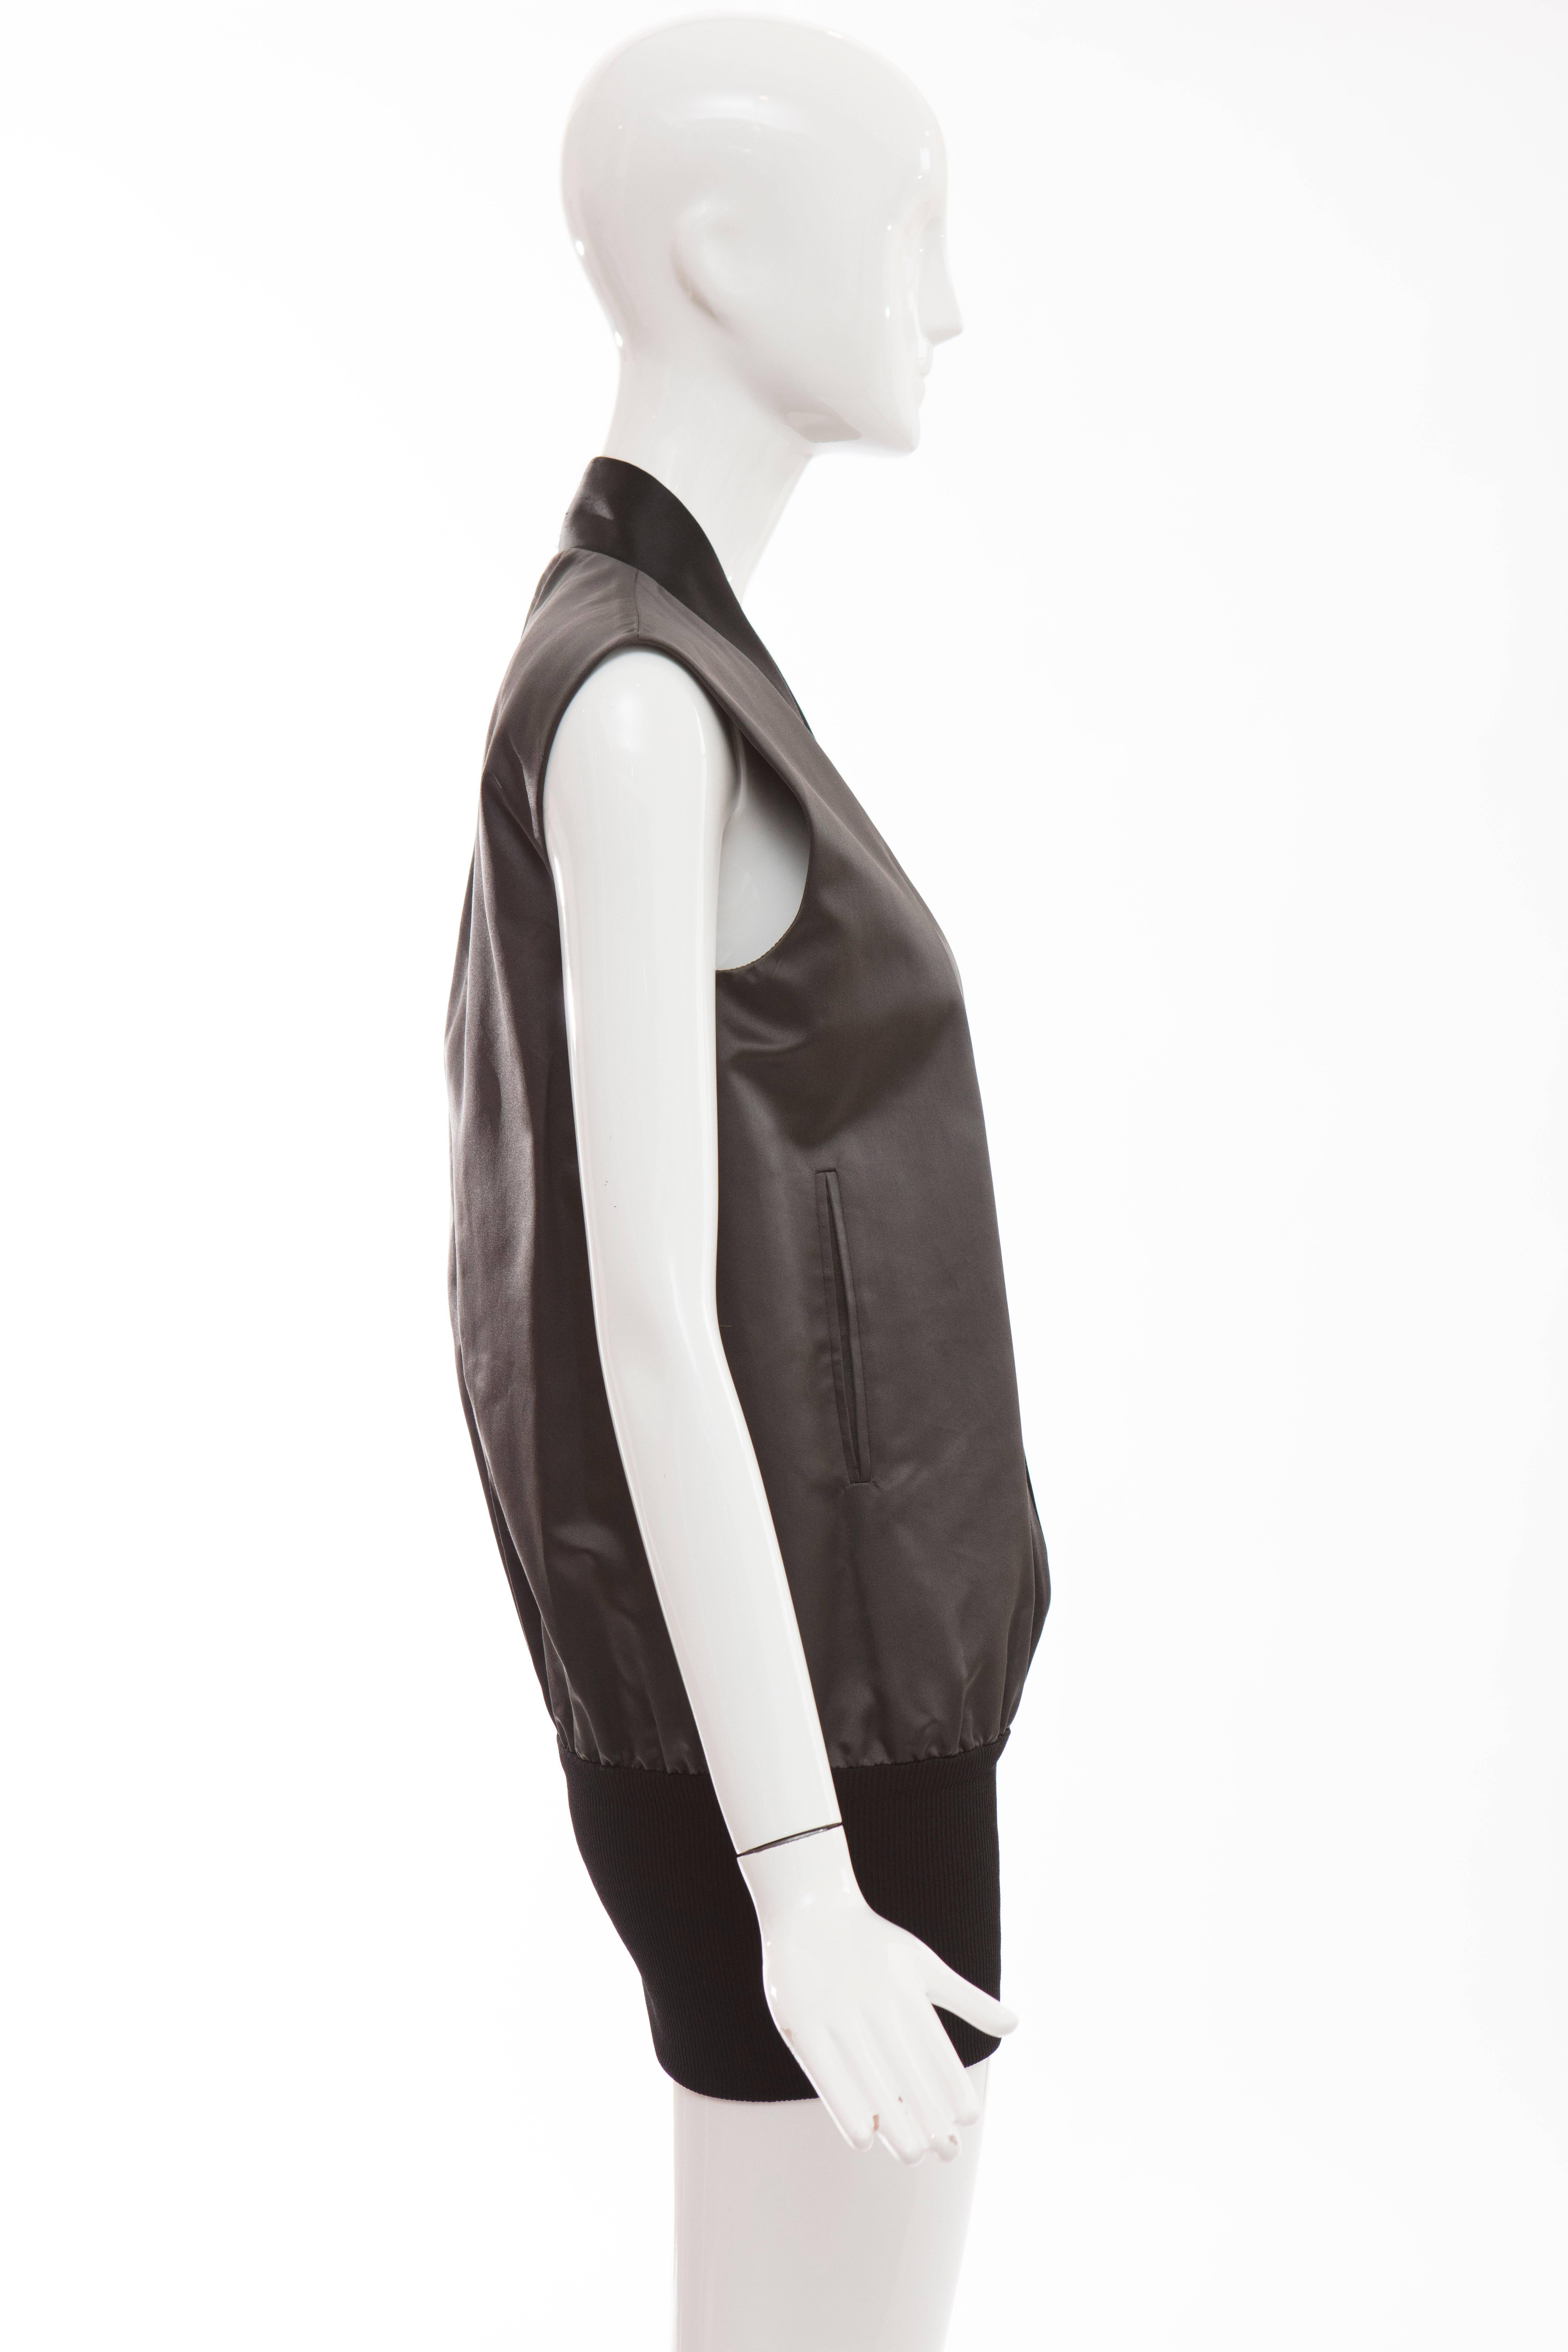 John Bartlett Charcoal Grey Duchess Silk Satin Vest, Autumn - Winter 1999 For Sale 1